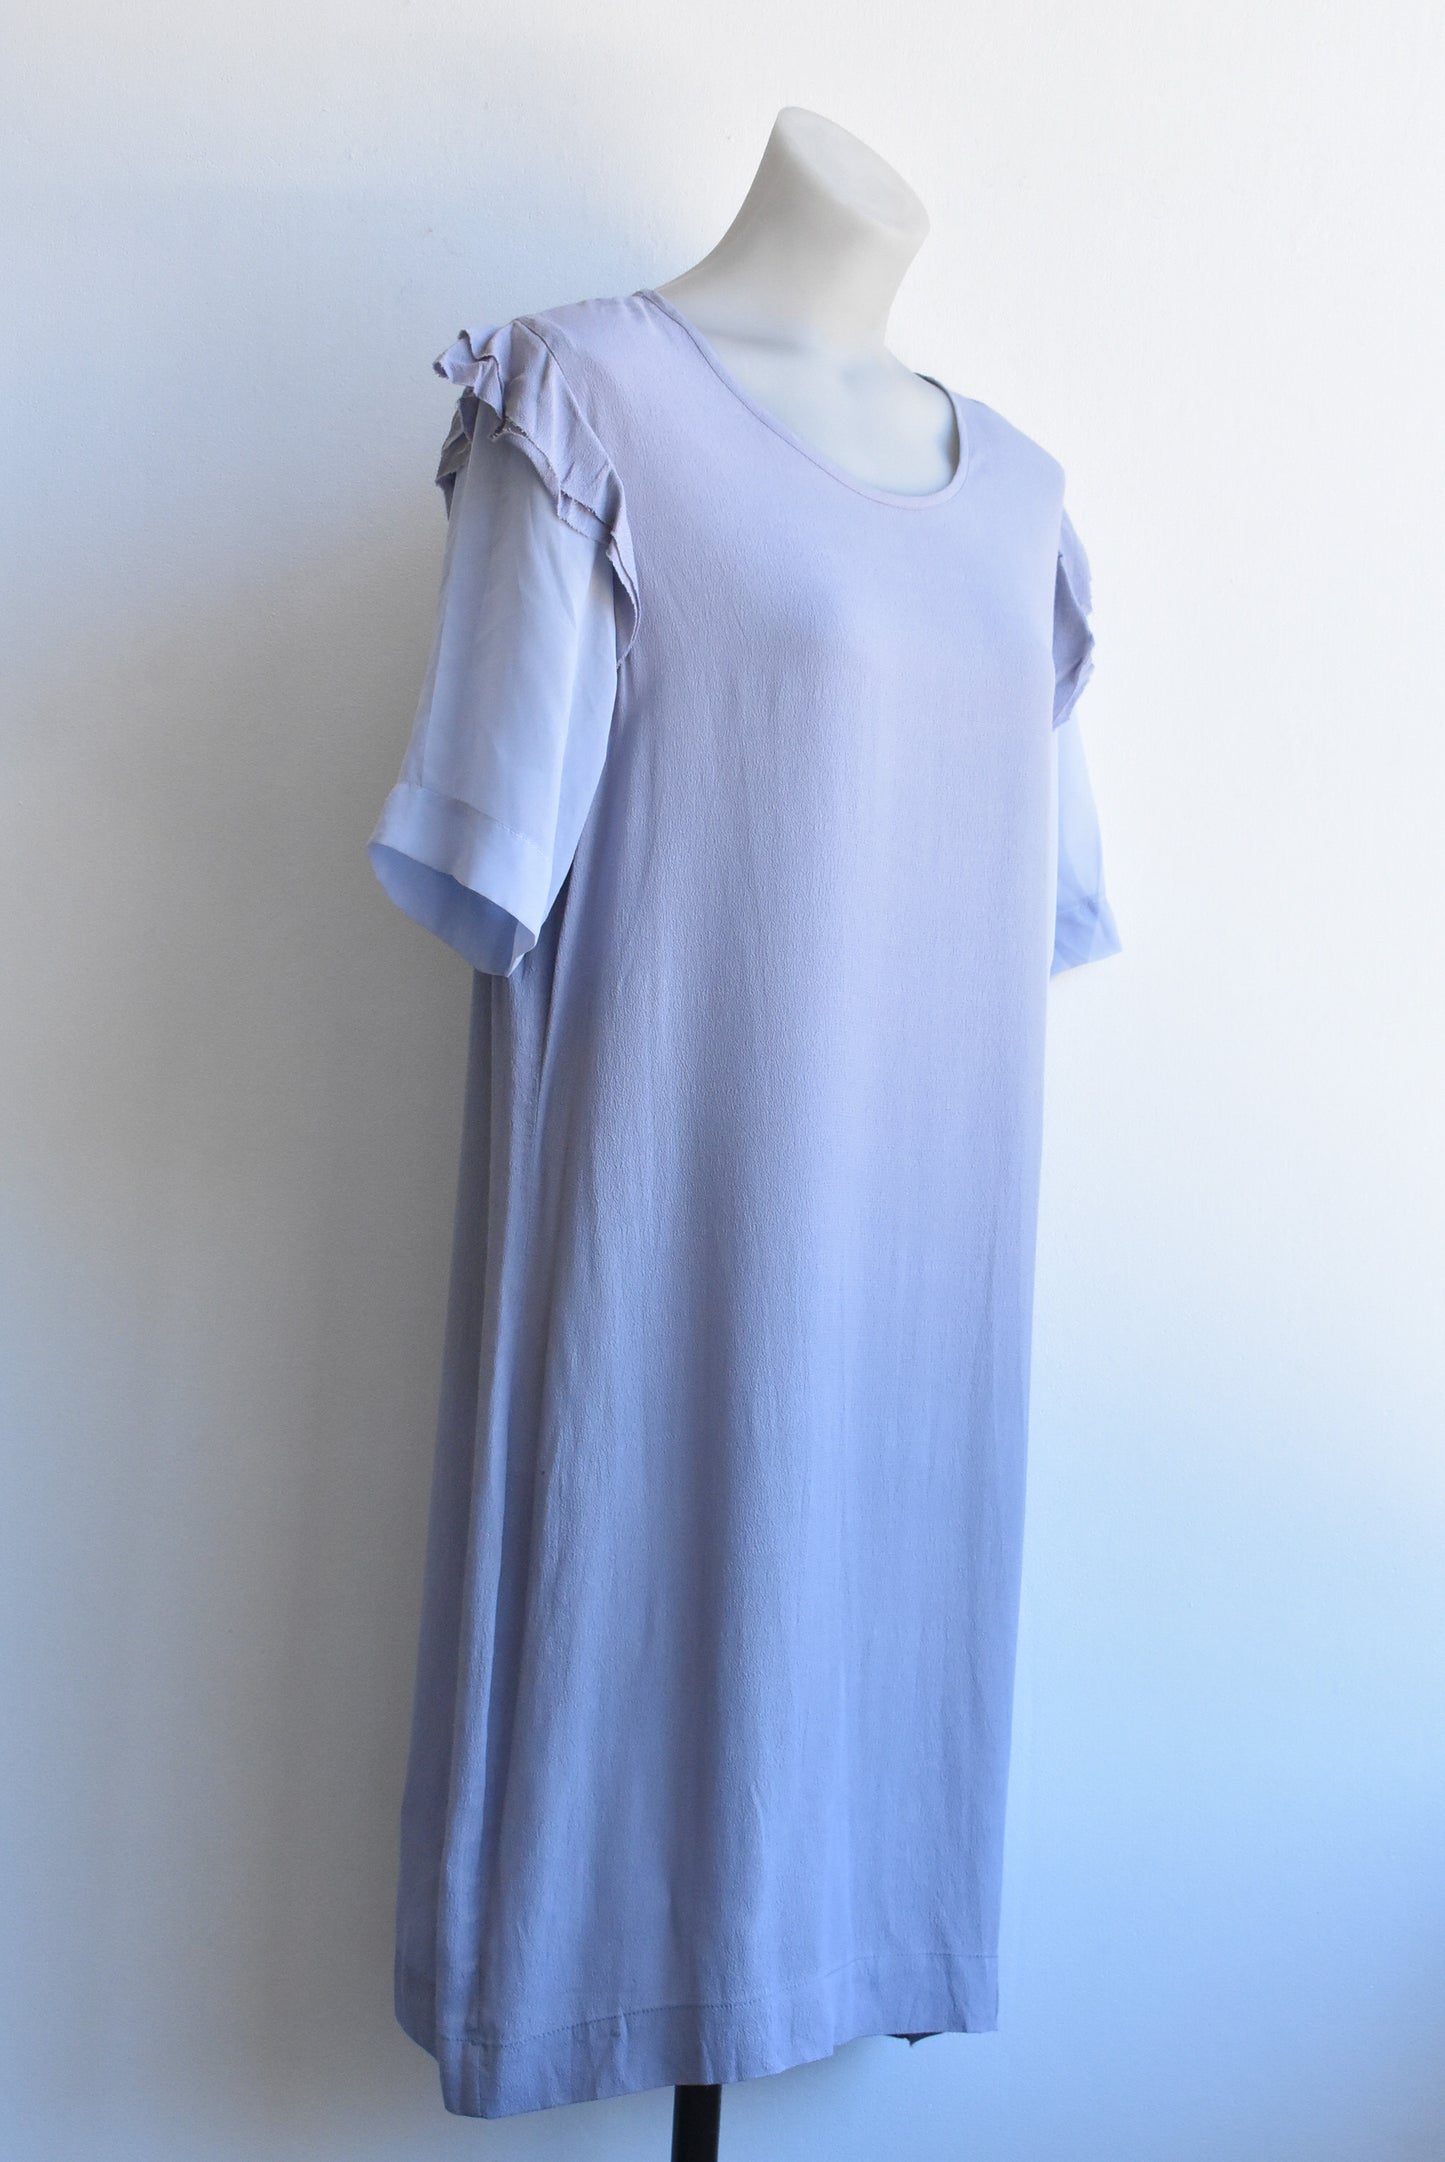 NYNE lavender sheer dress, size 12